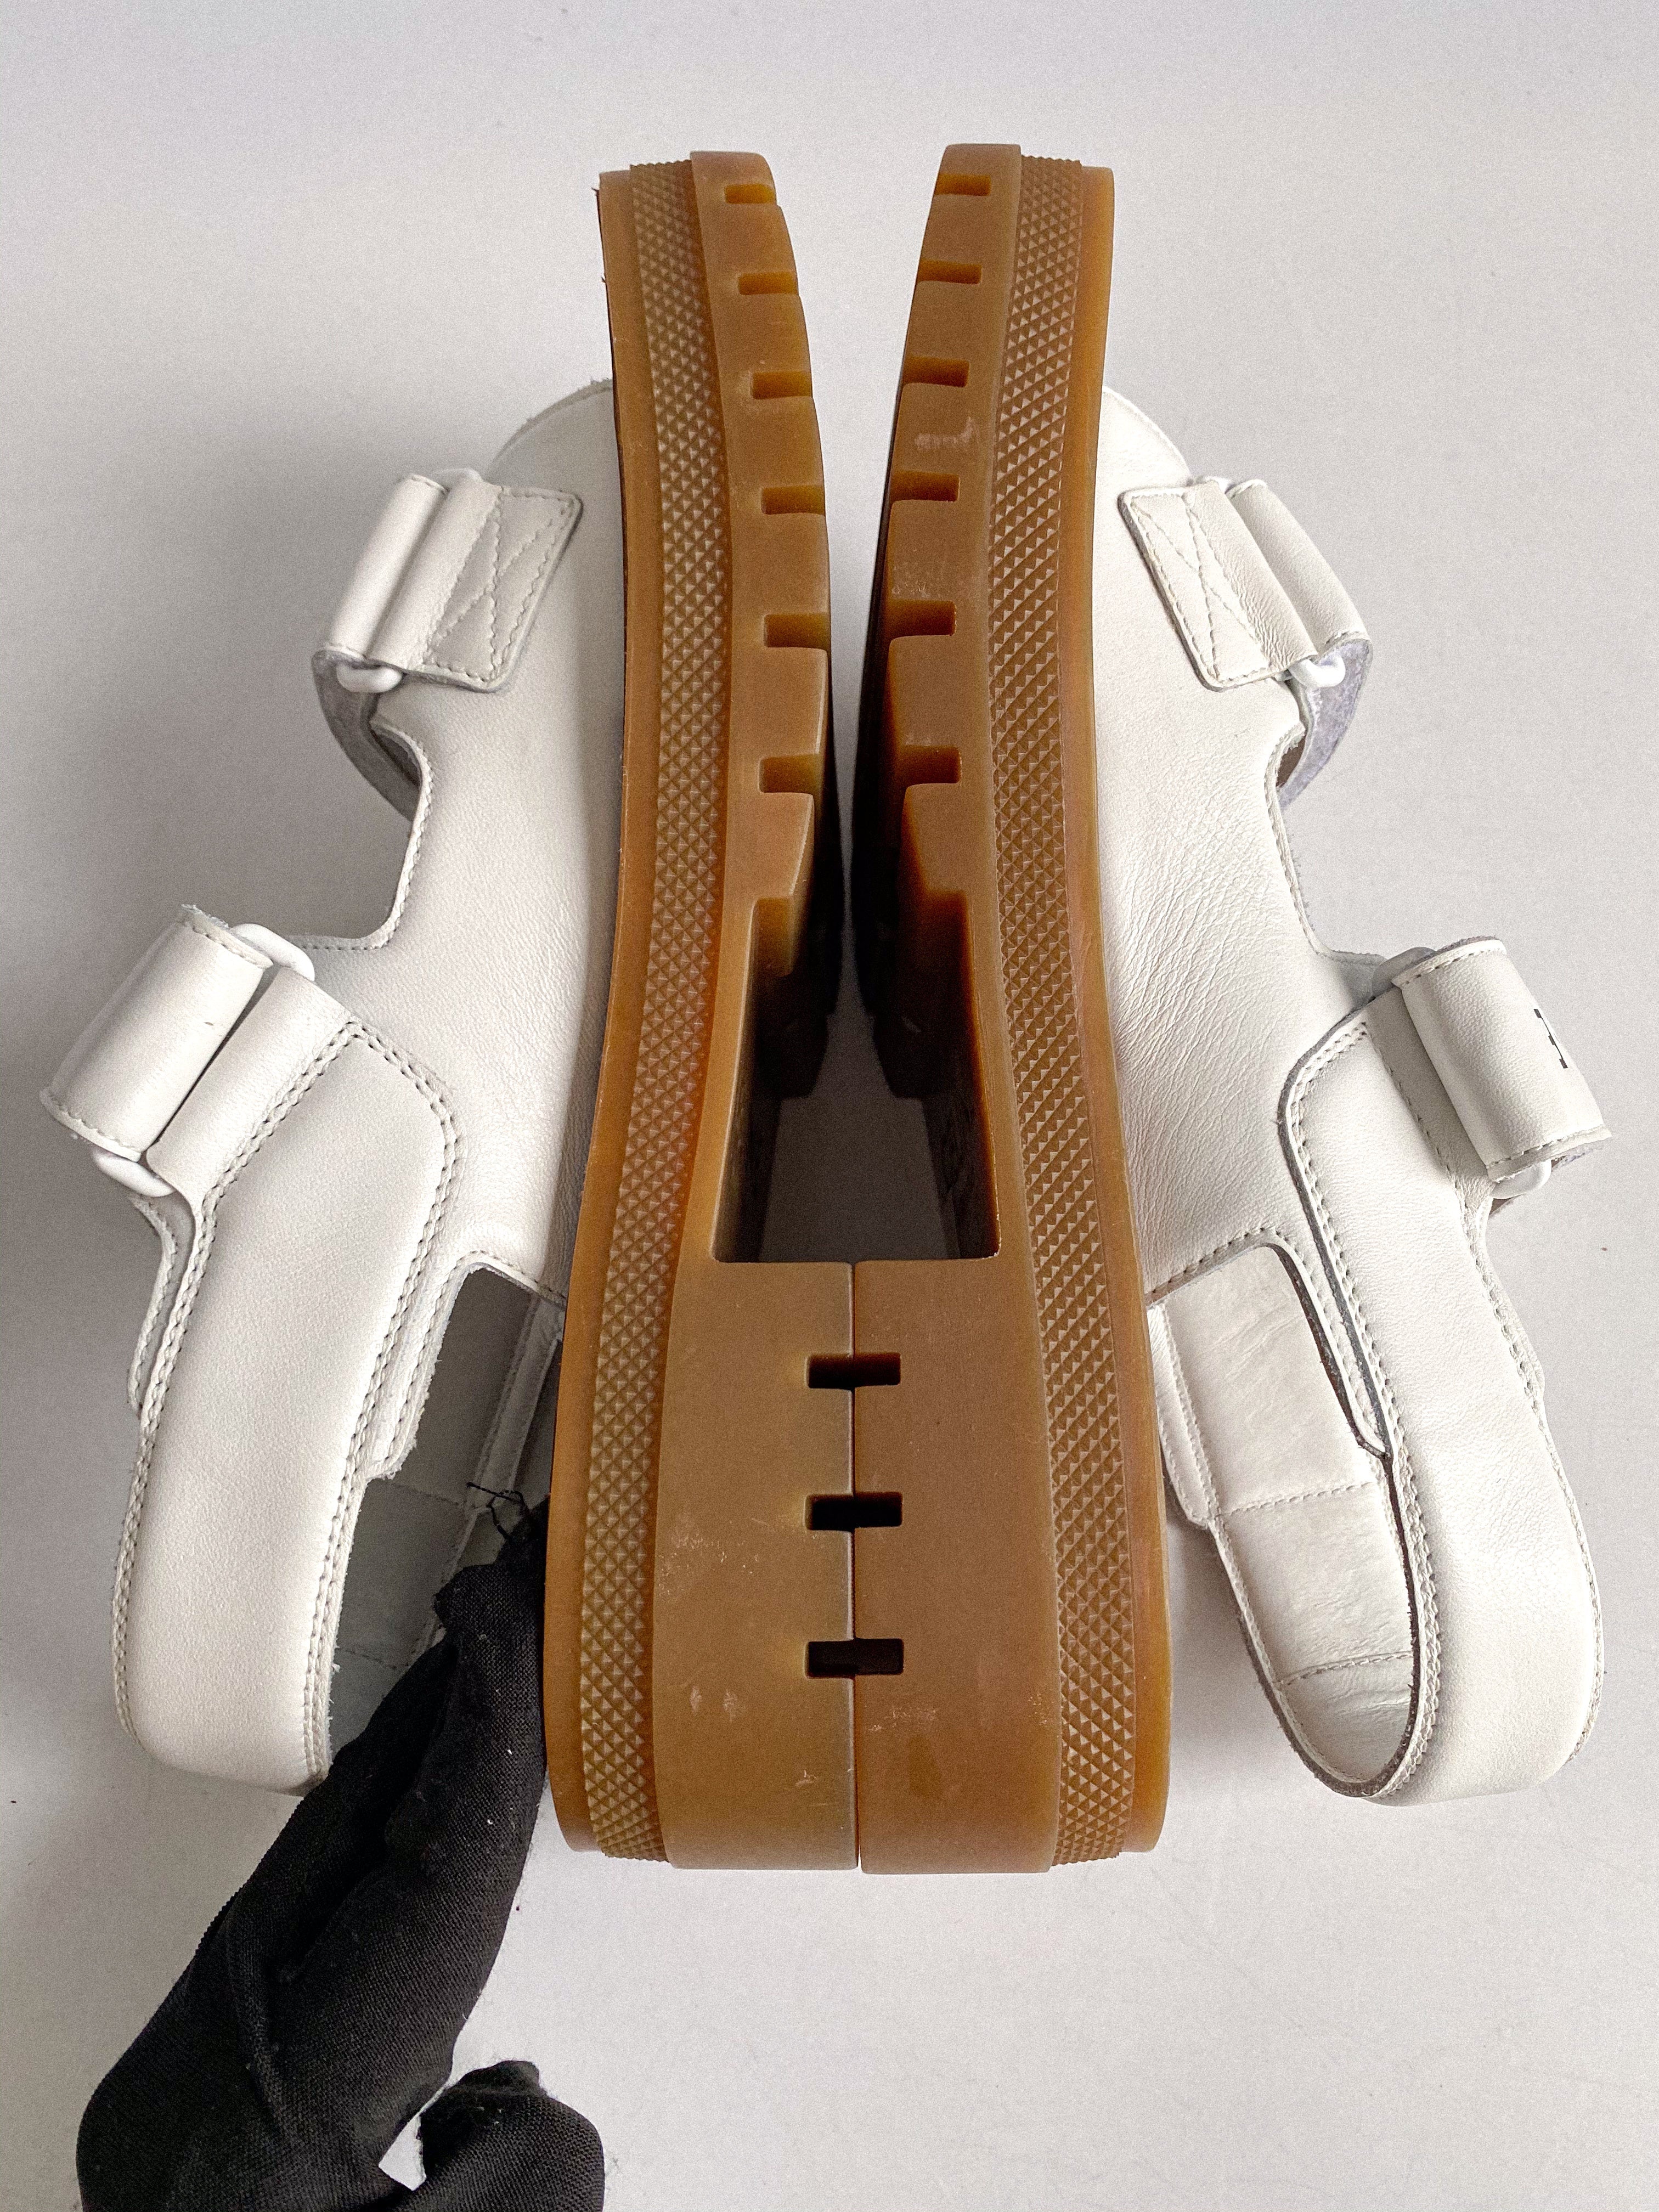 Celine Leo Scratch Sandals in White Calfskin Size 36 EUR (25cm)